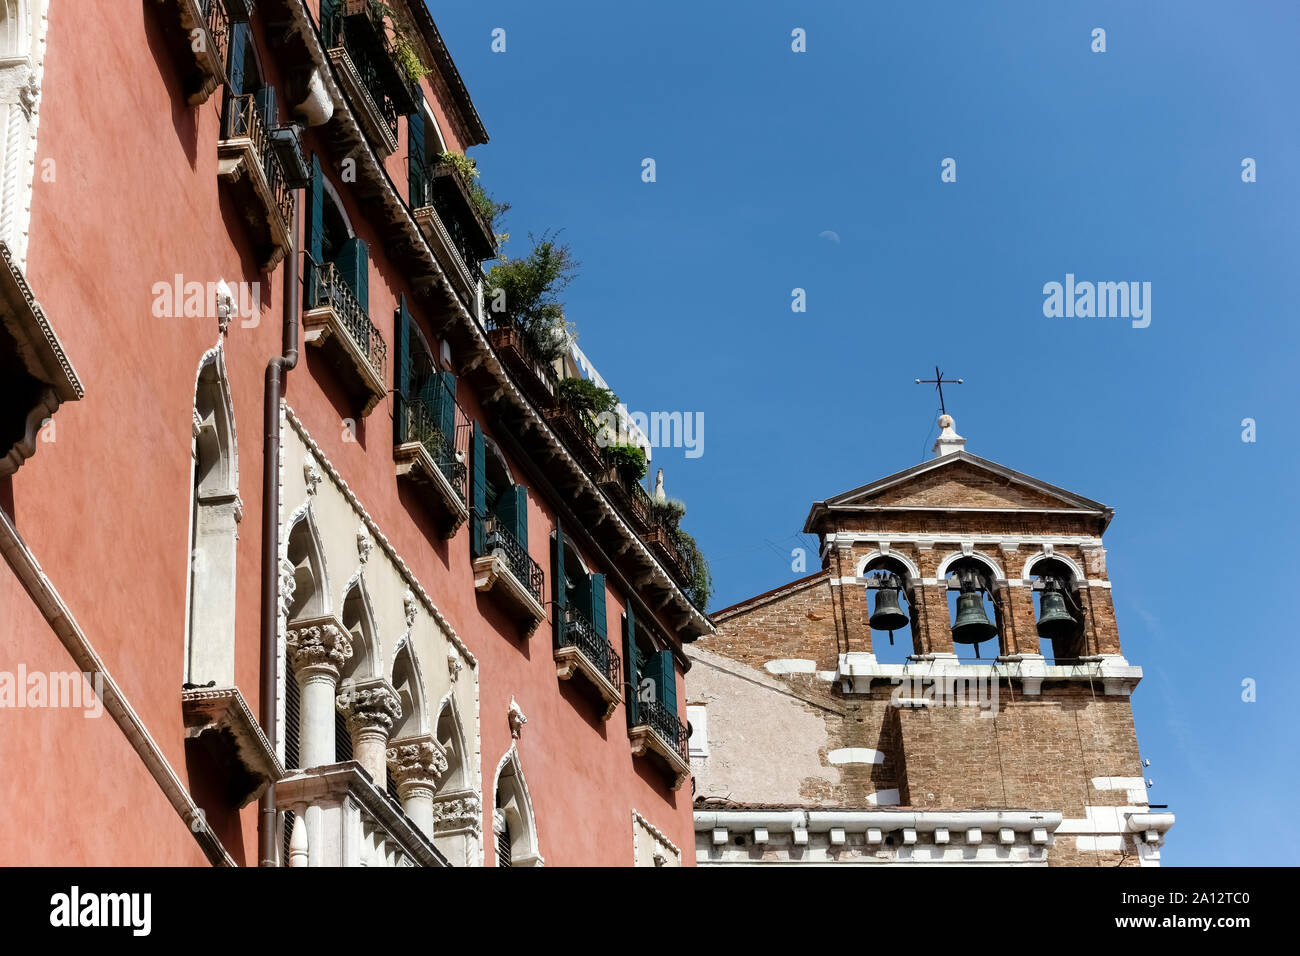 Bell tower of Santa Maria del Giglio also known as Santa Maria Zobenigo. Venice Church. Italy, Europe, EU. Stock Photo